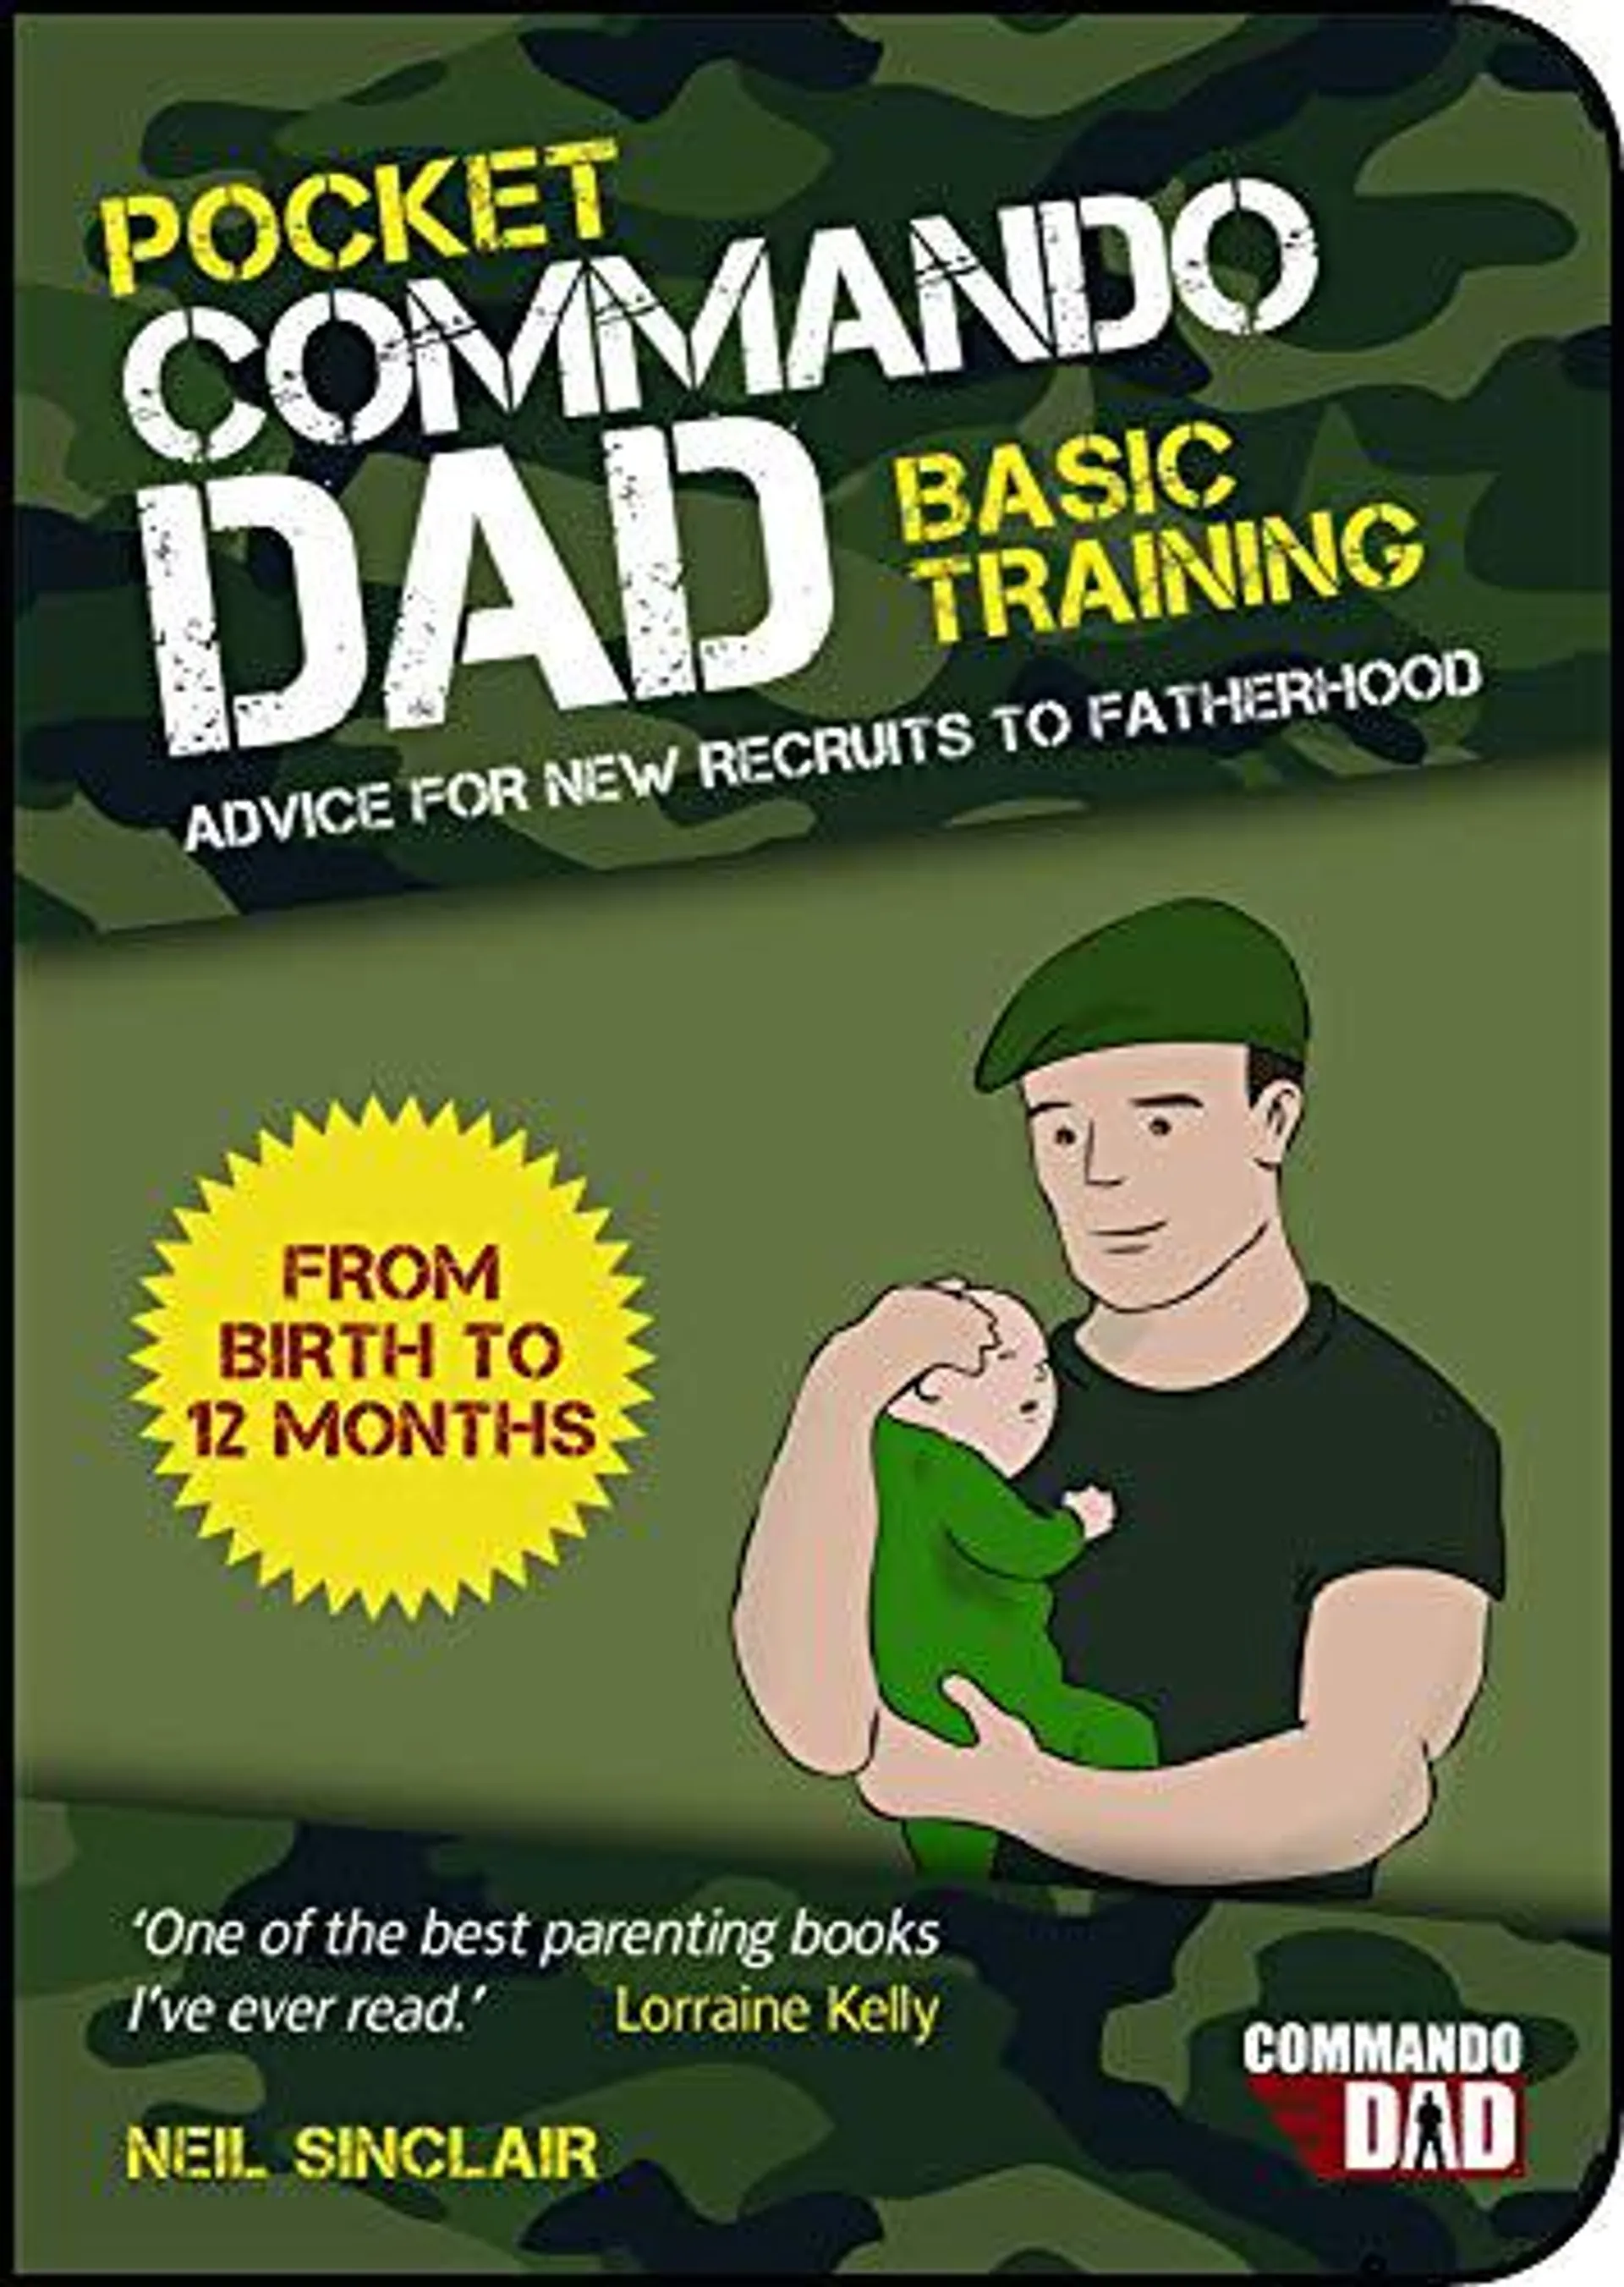 Pocket Commando Dad by Neil Sinclair